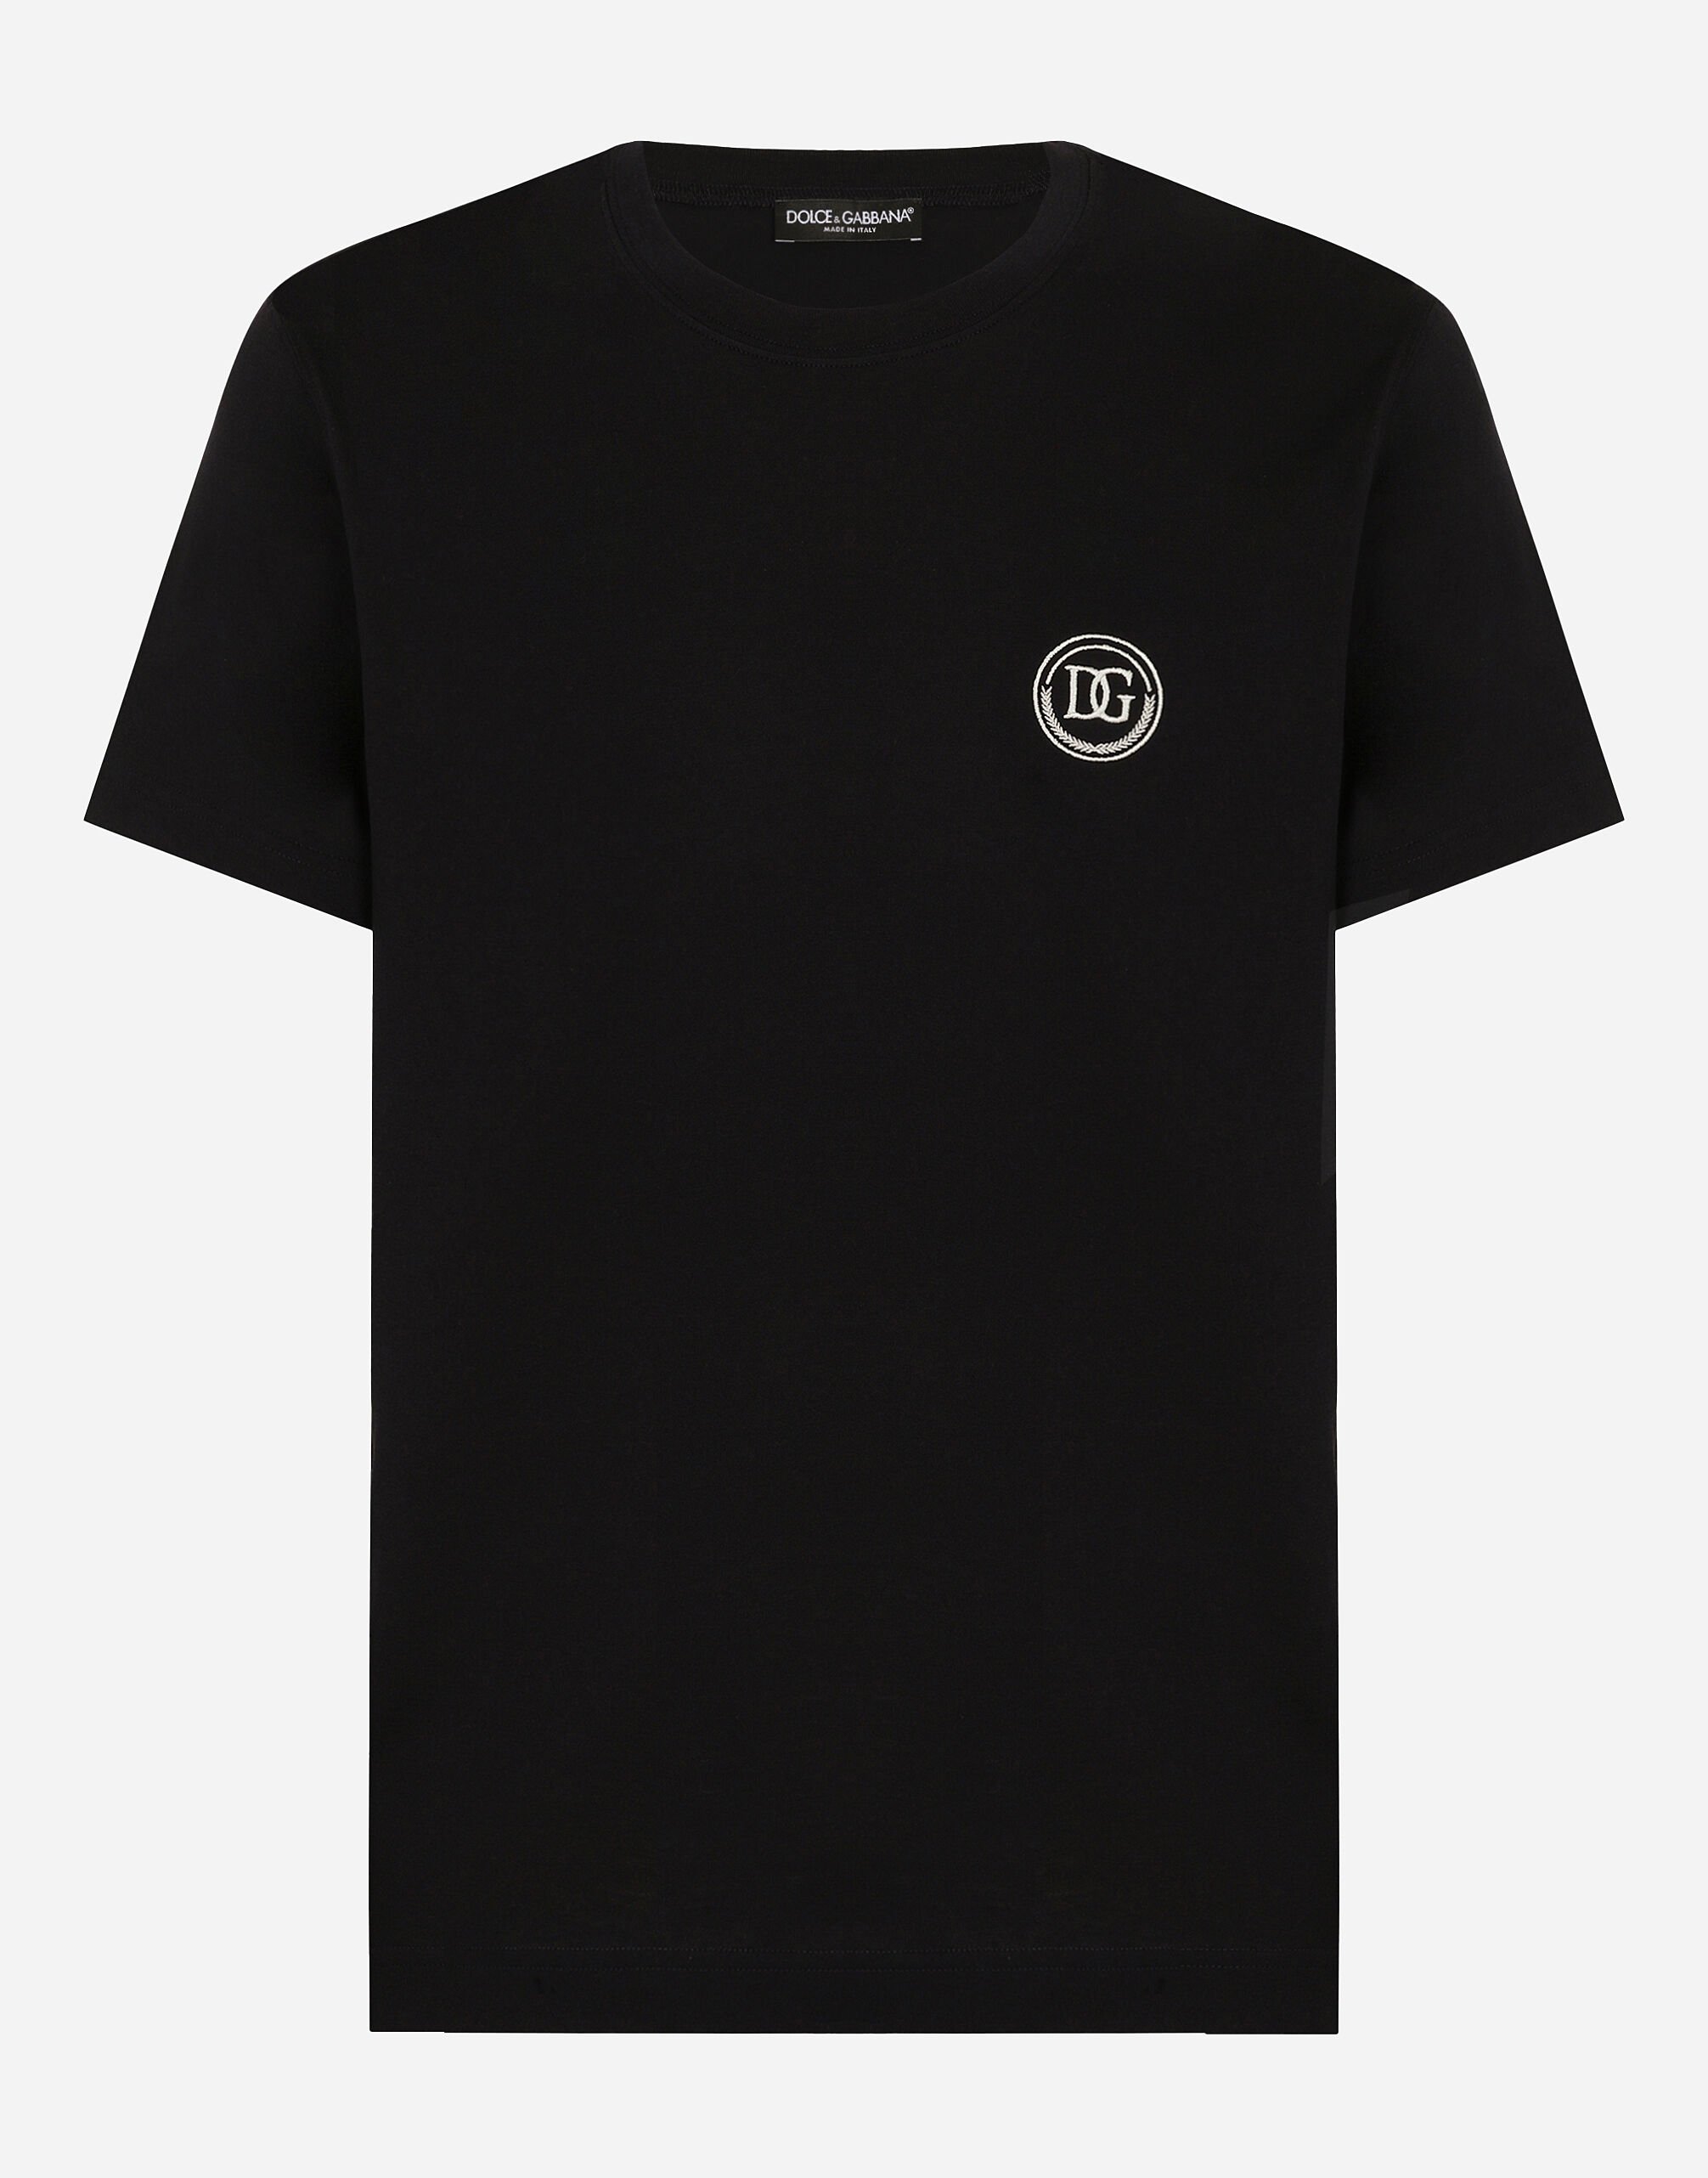 Dolce & Gabbana Short-sleeved T-shirt with DG embroidery Black GVR7HZG7I3I